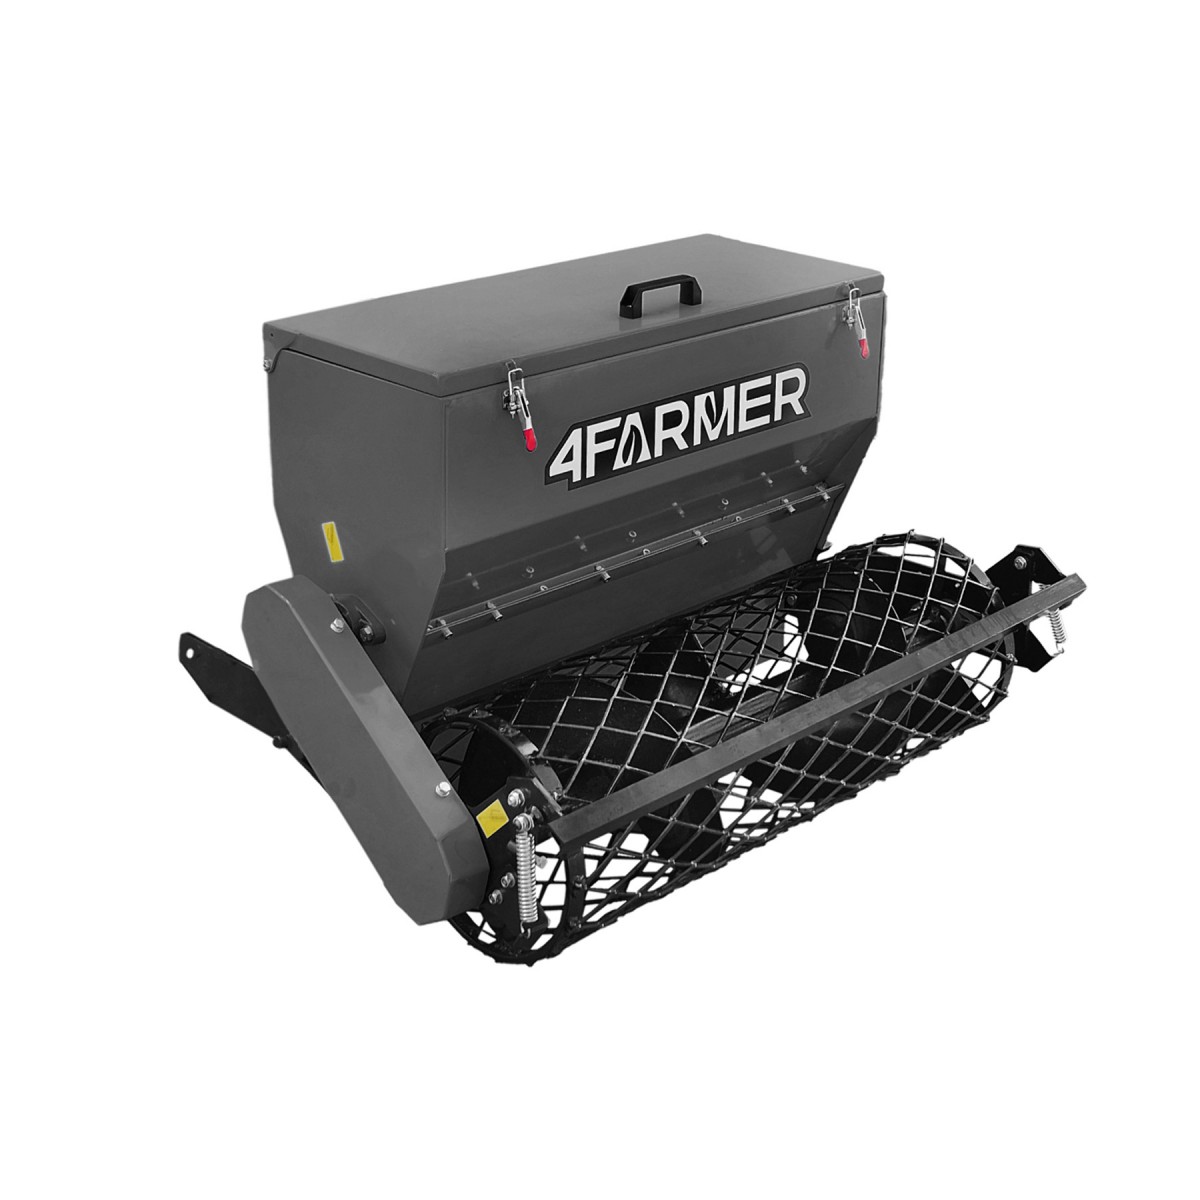 Seeder with a string roller for the SB 85 4FARMER tiller